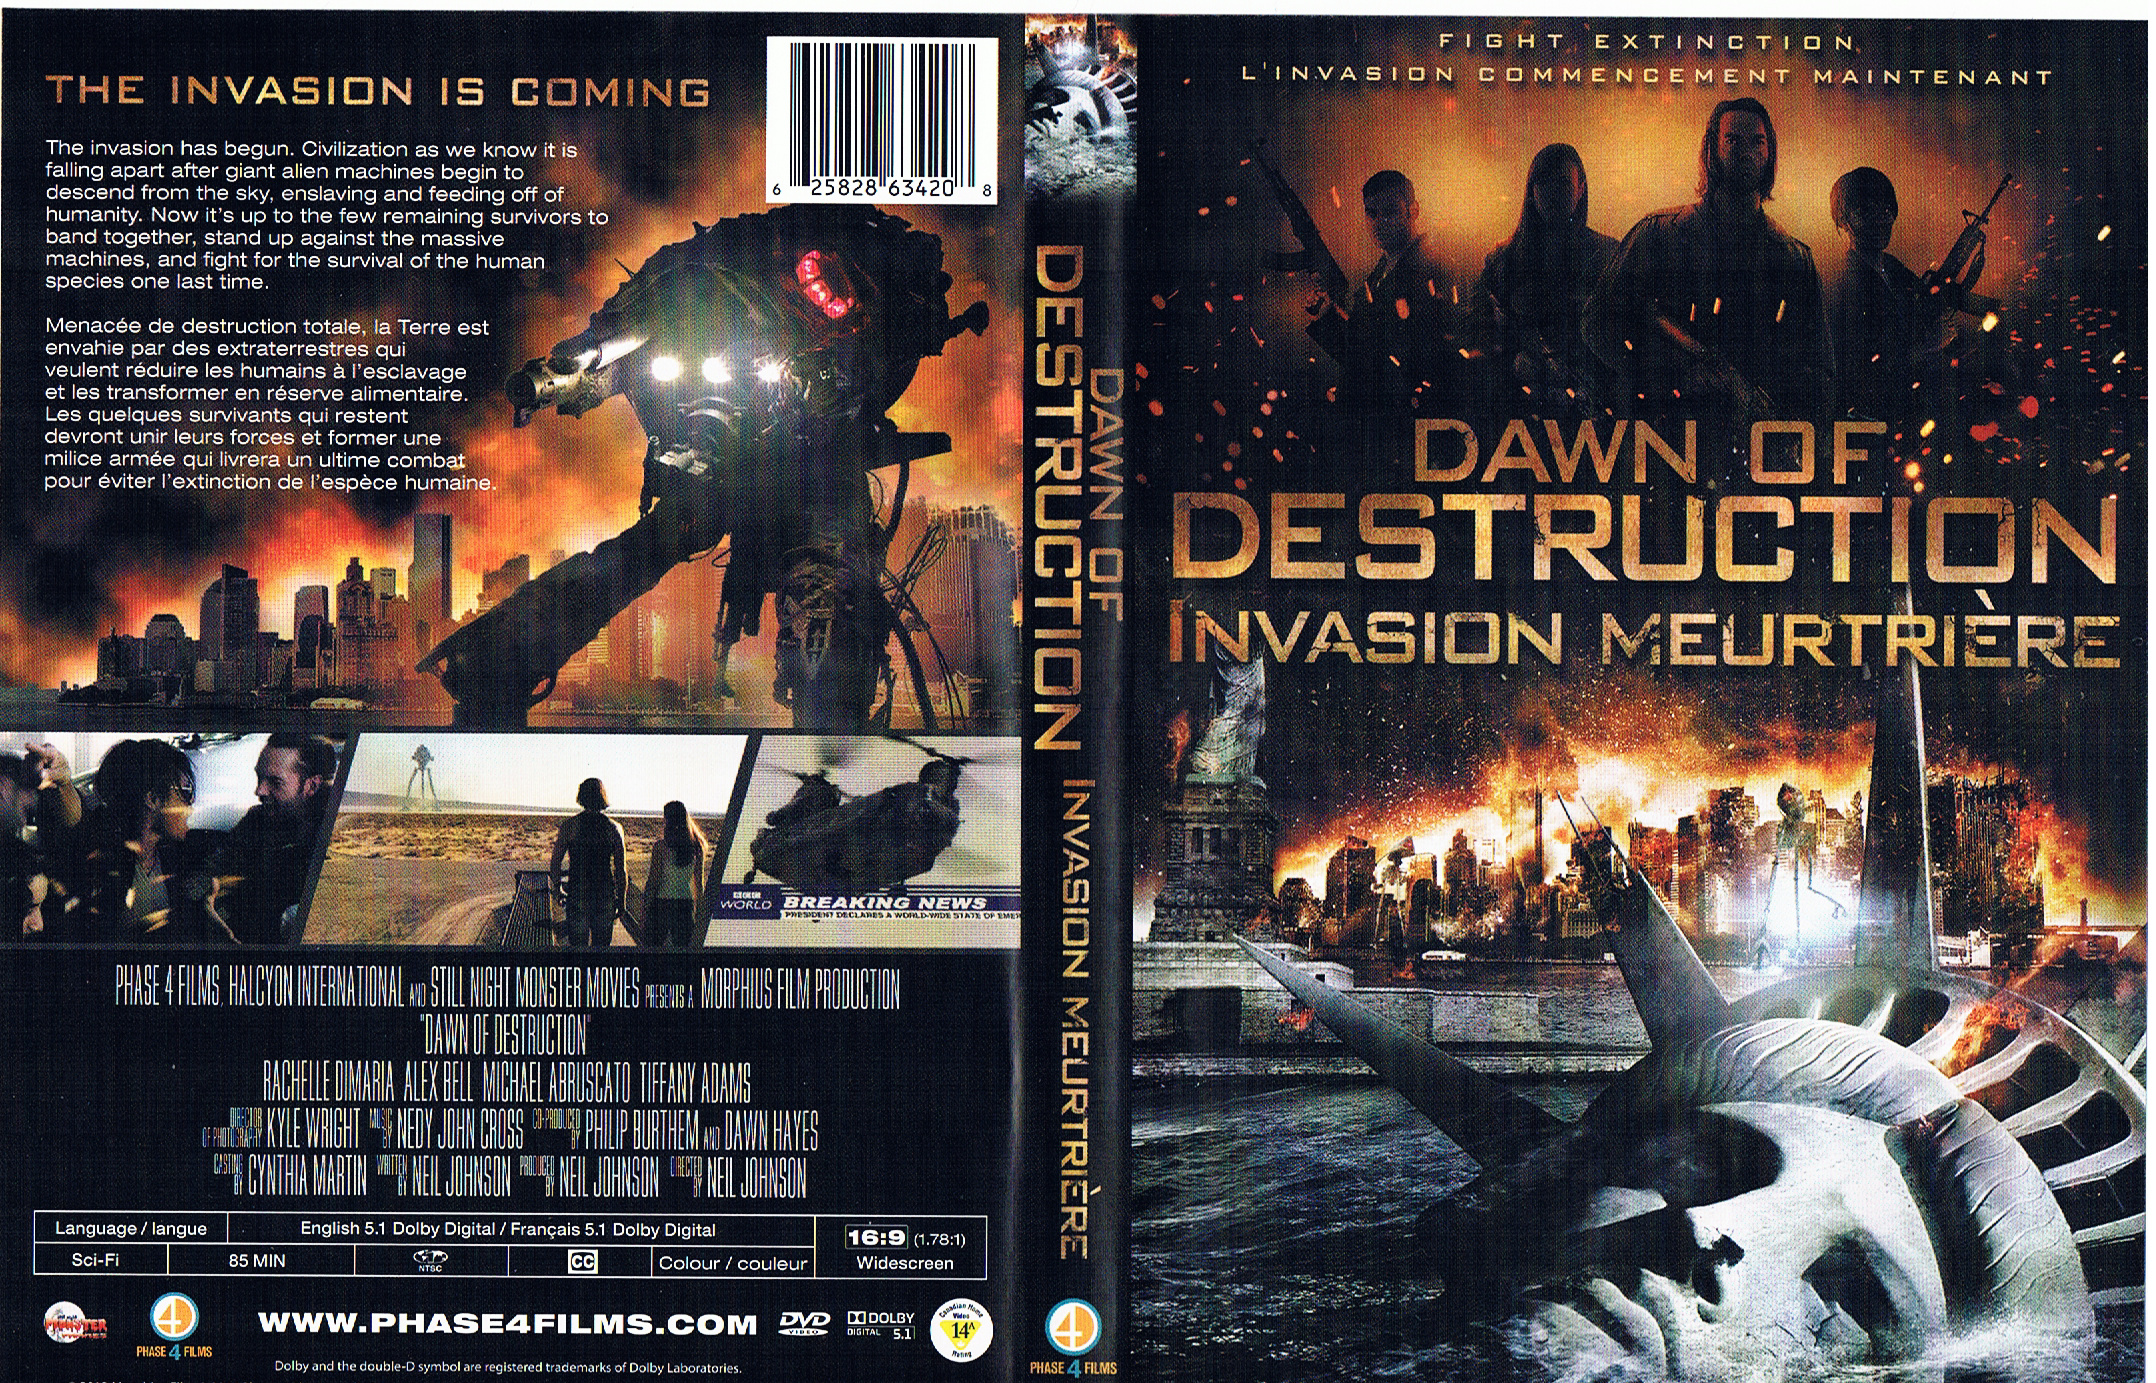 Jaquette DVD Invasion meurtrire - Dawn of destruction (Canadienne)